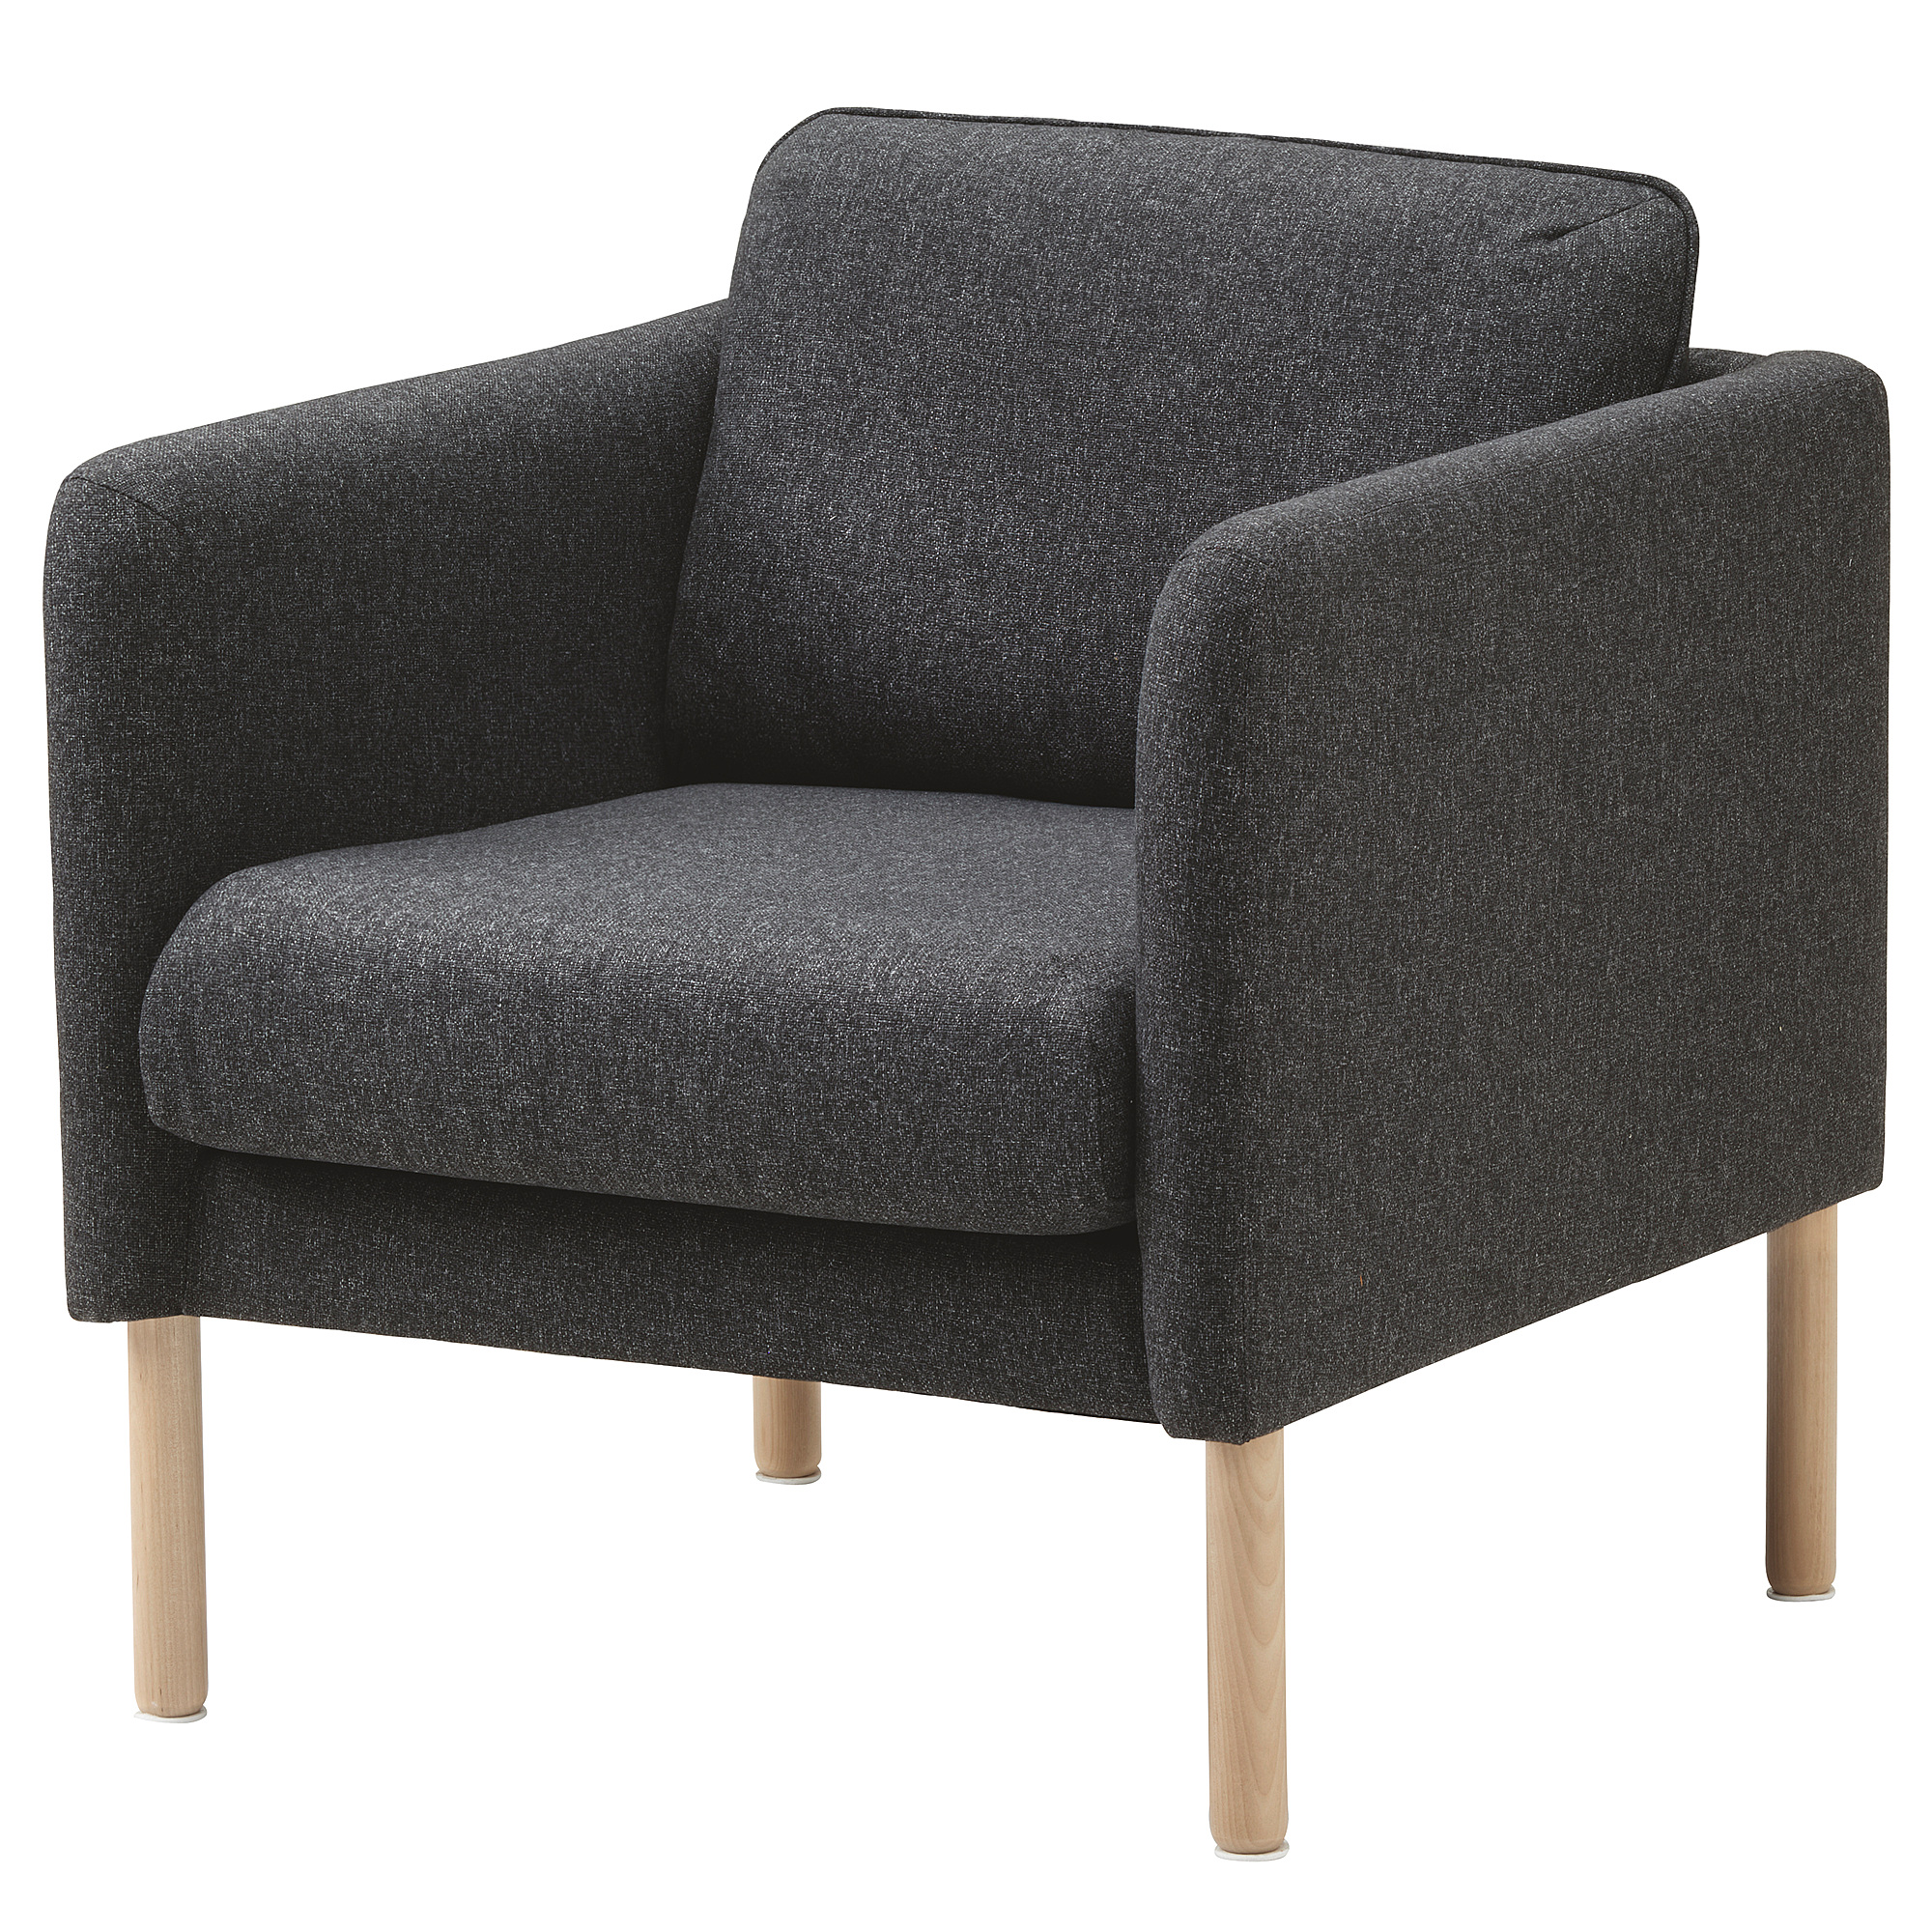 VISKABACKA - 扶手椅, Gunnared 深灰色, 73x75x44 公分| IKEA 線上購物